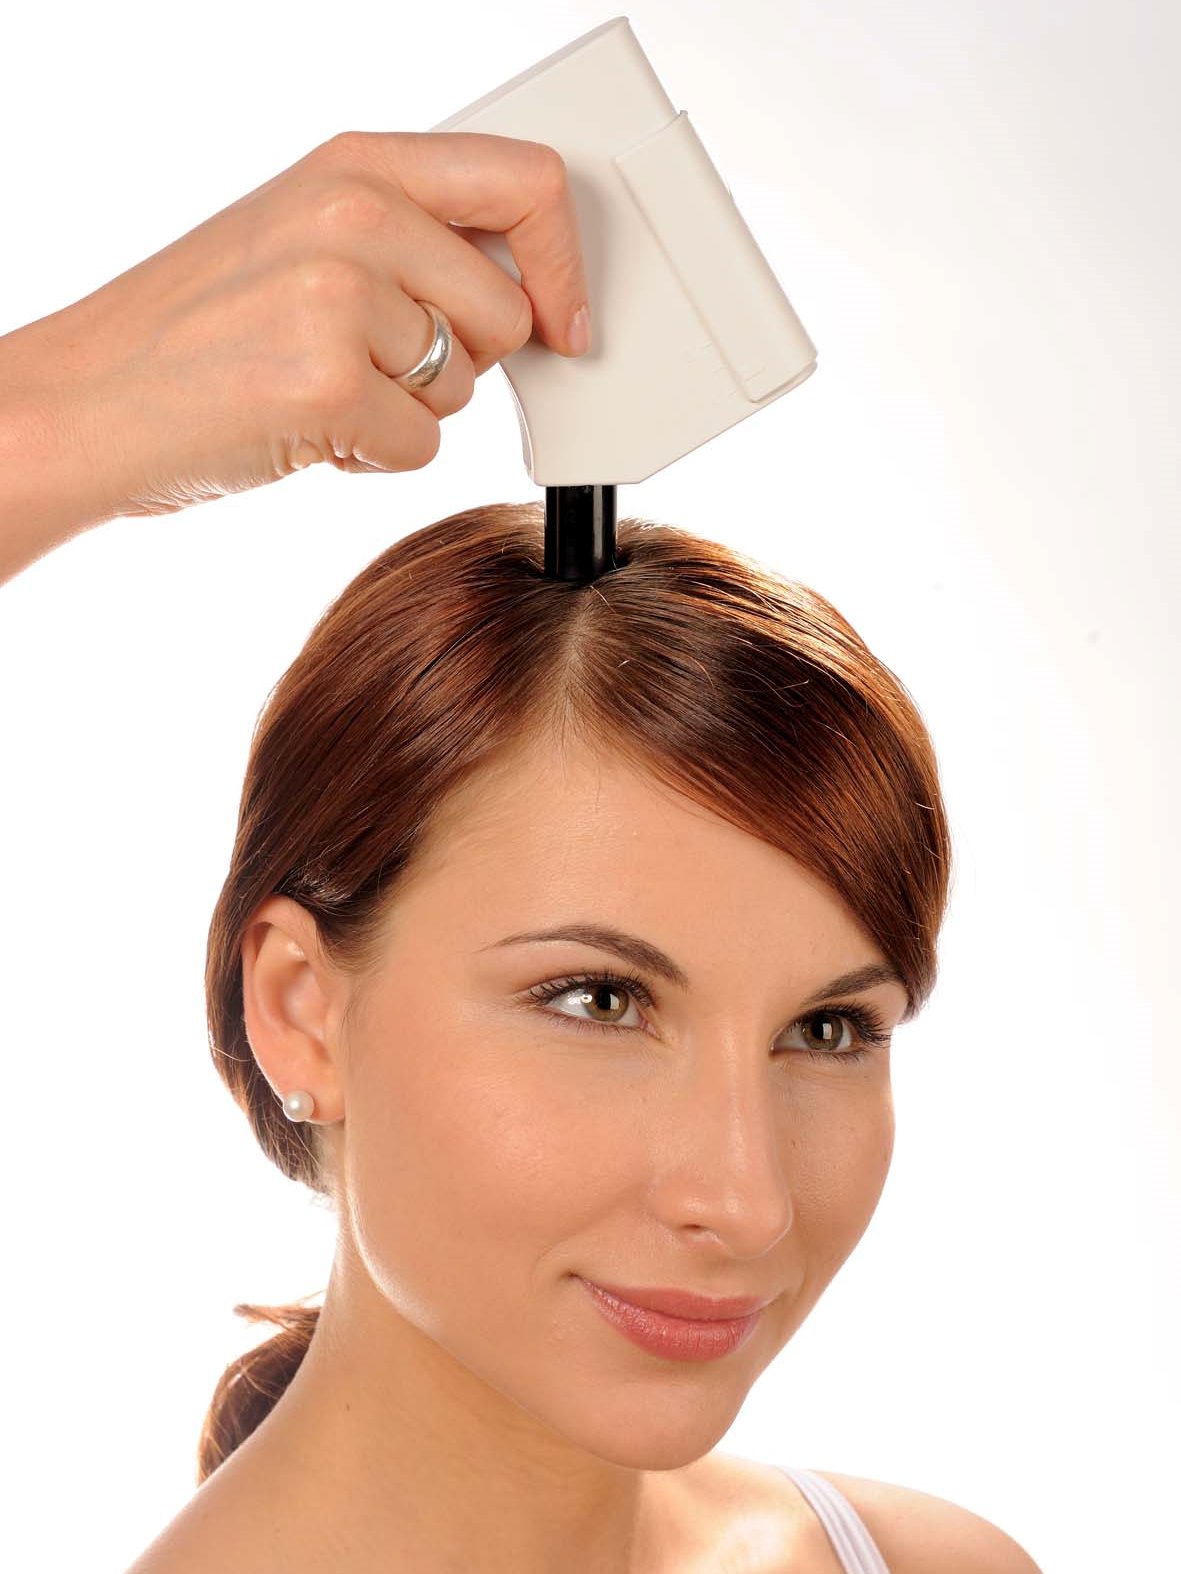 sebum measurement on hair and scalp